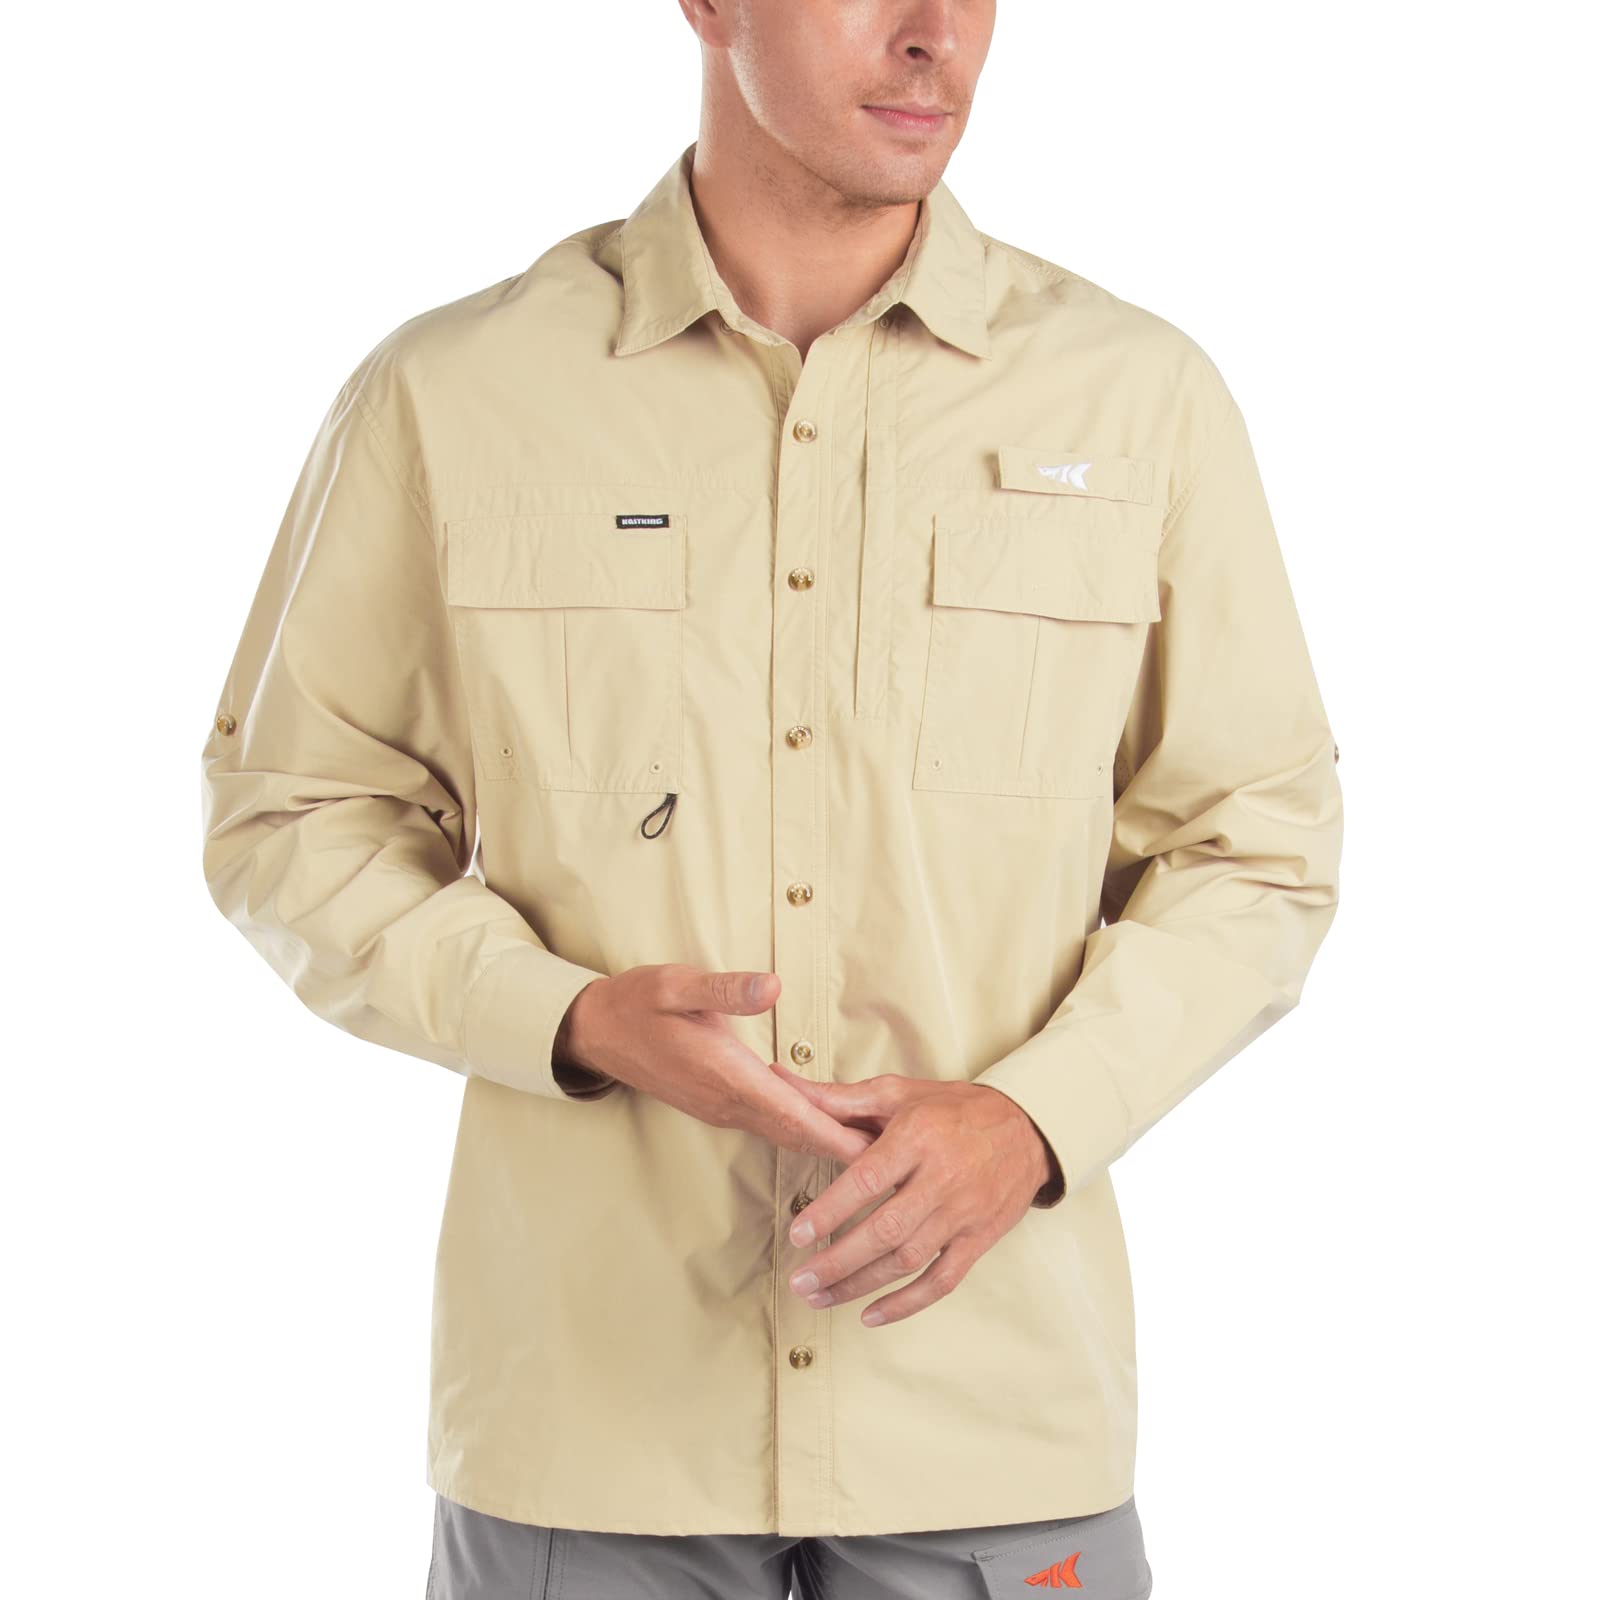 KastKing ReKon Men's Fishing Shirts, UPF 50+ Quick-Dry Short & Long Sleeve  Hiking Beach Shirts for Men, Breathable Khaki - L/S XX-Large